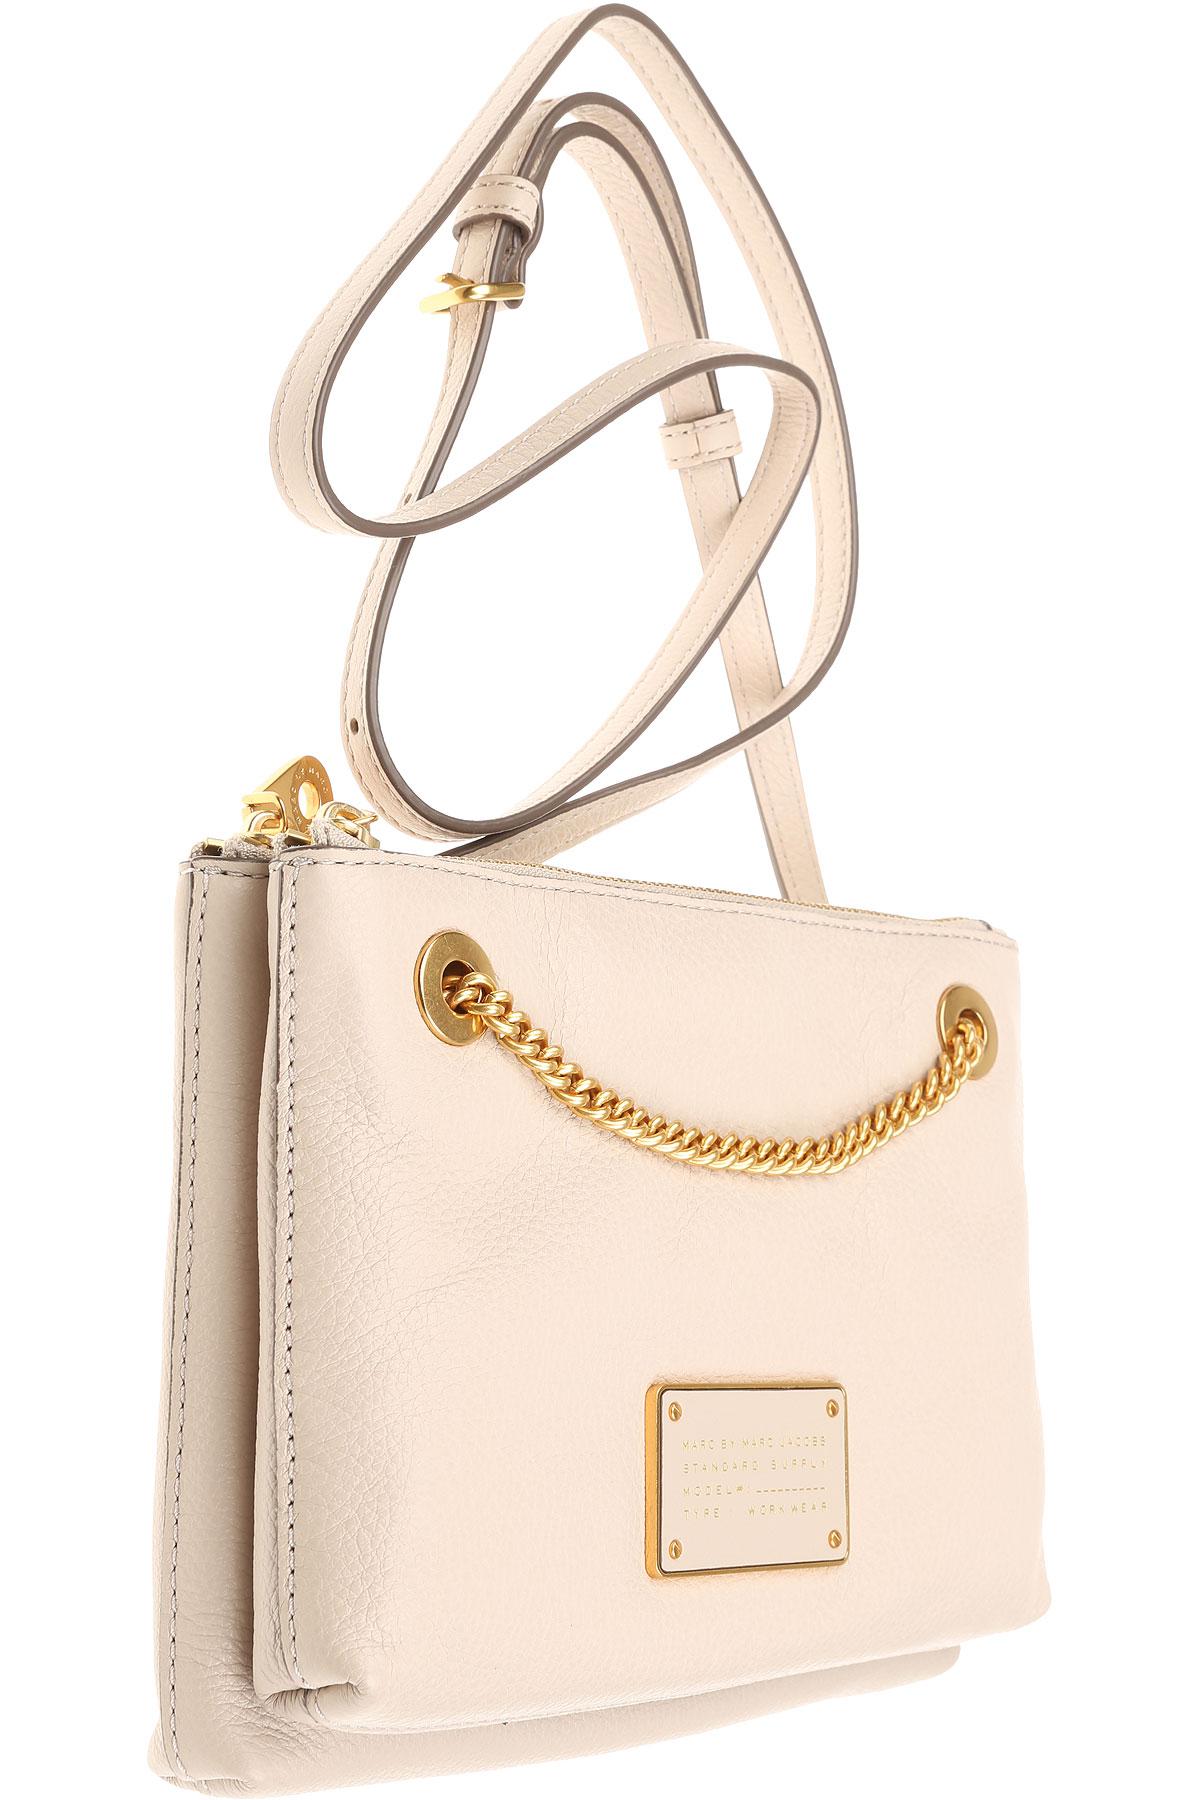 Marc Jacobs Leather Handbags - Lyst